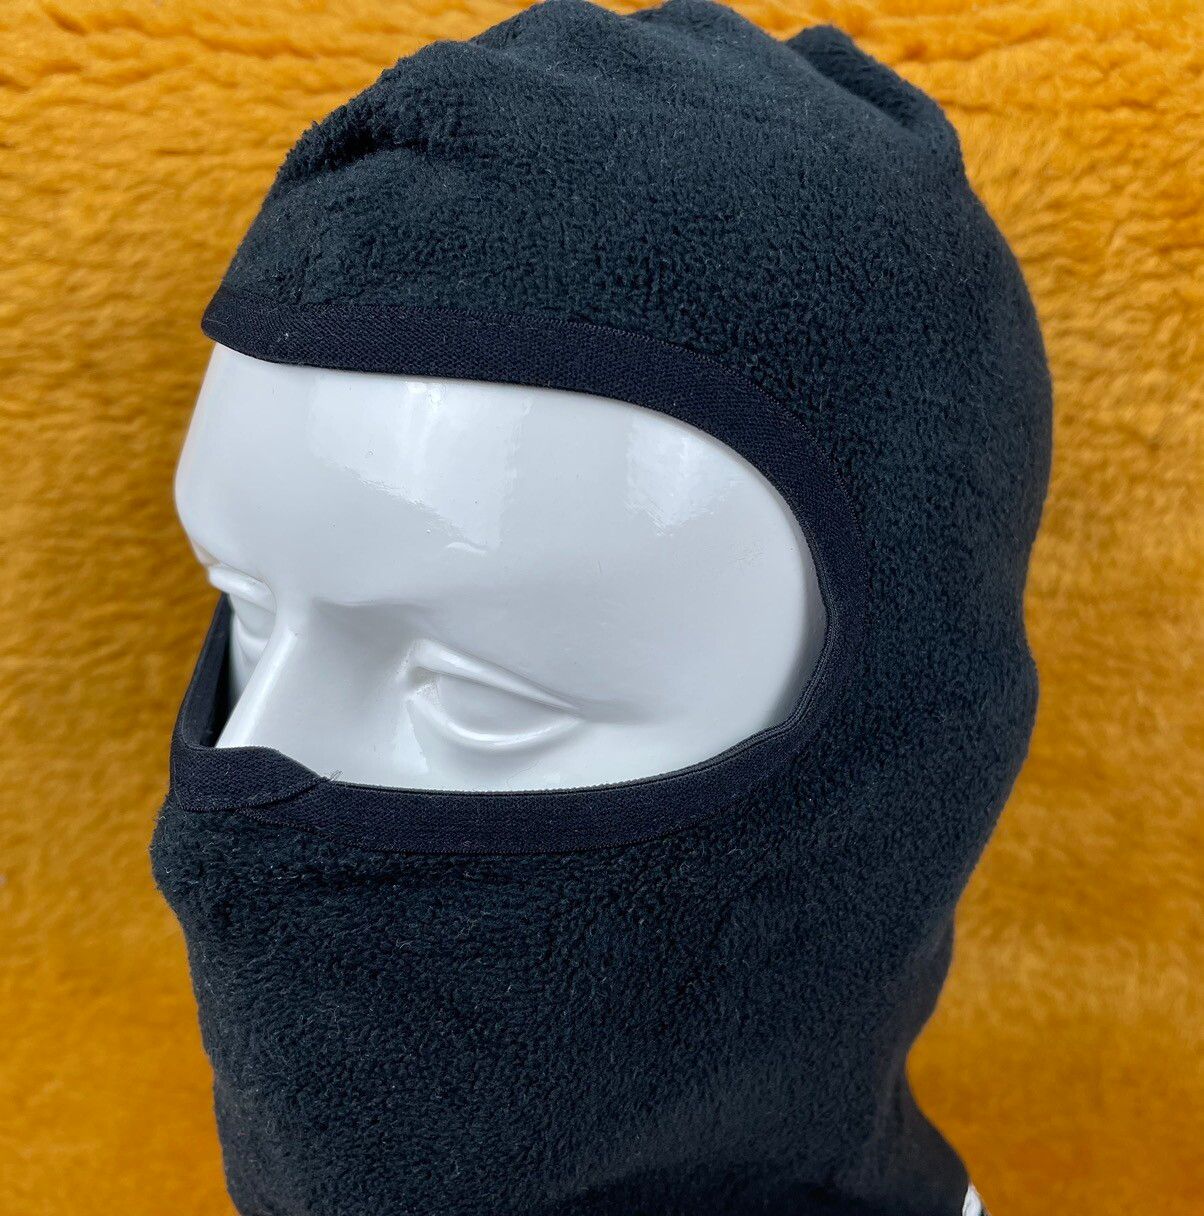 volcom balaclava mask ski mask tg1 - 3